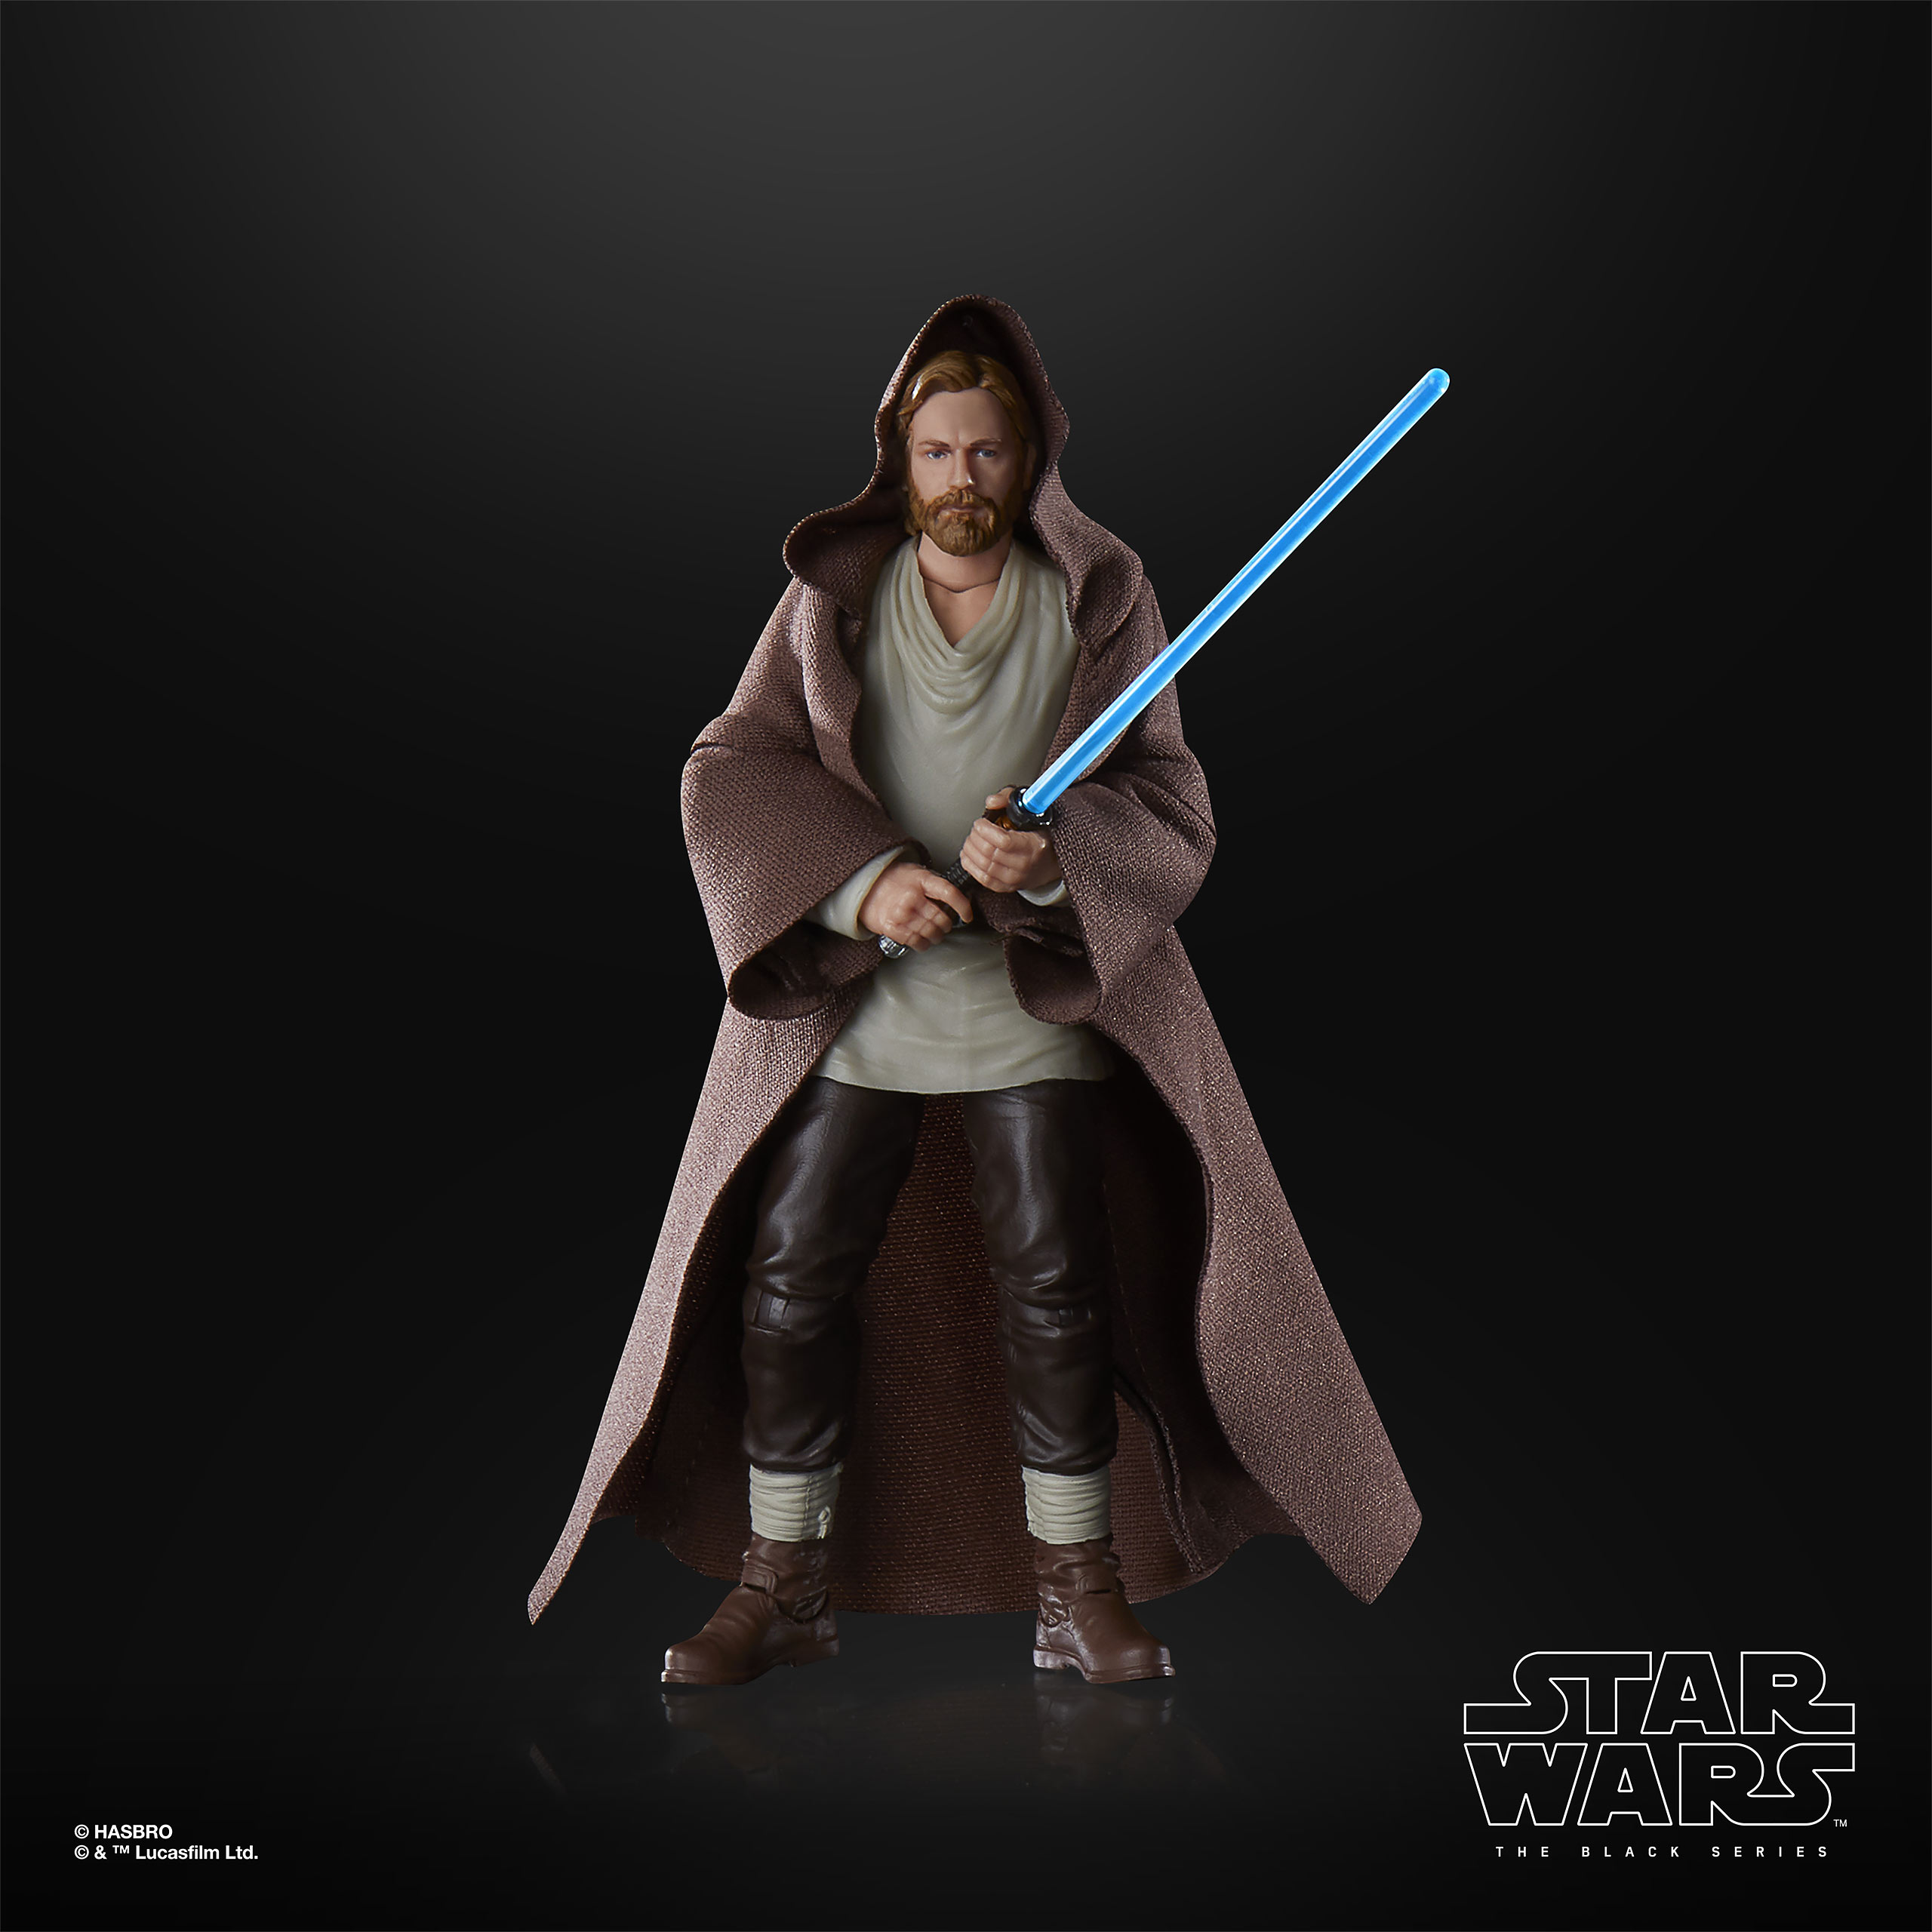 Figurine d'action Jedi Obi-Wan Kenobi - Star Wars